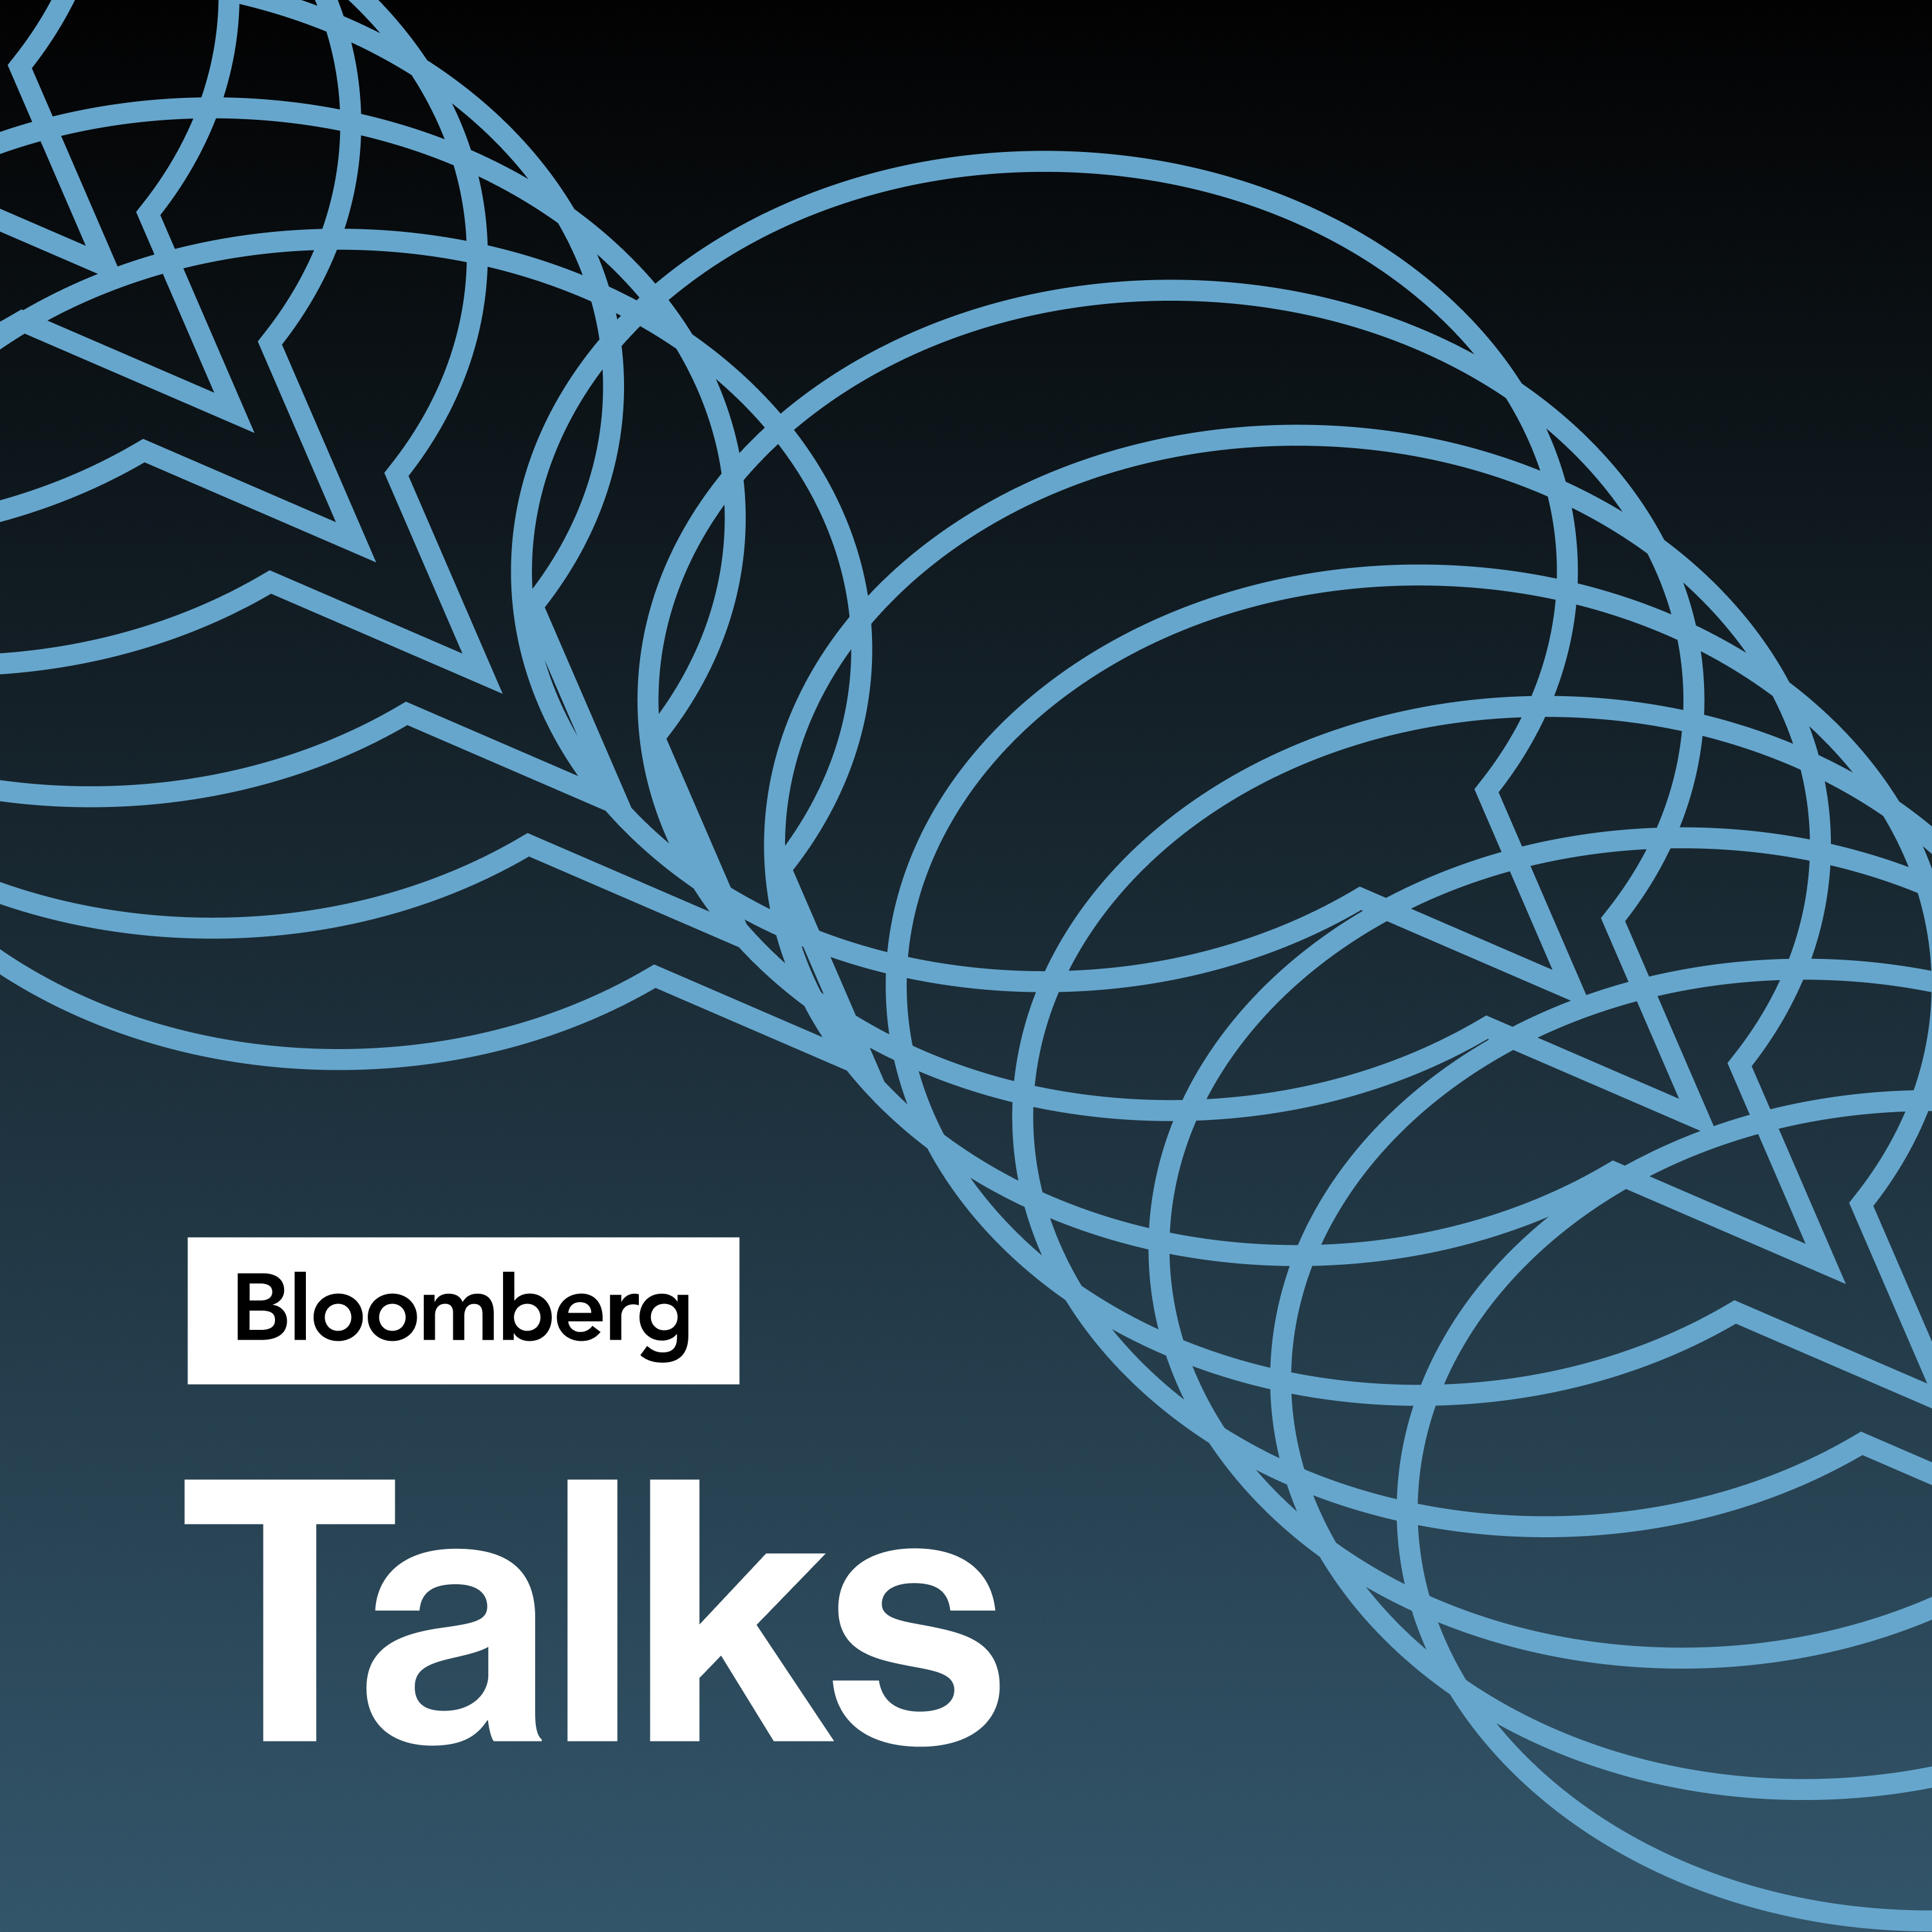 Thomas Heatherwick Talks Future of Buildings